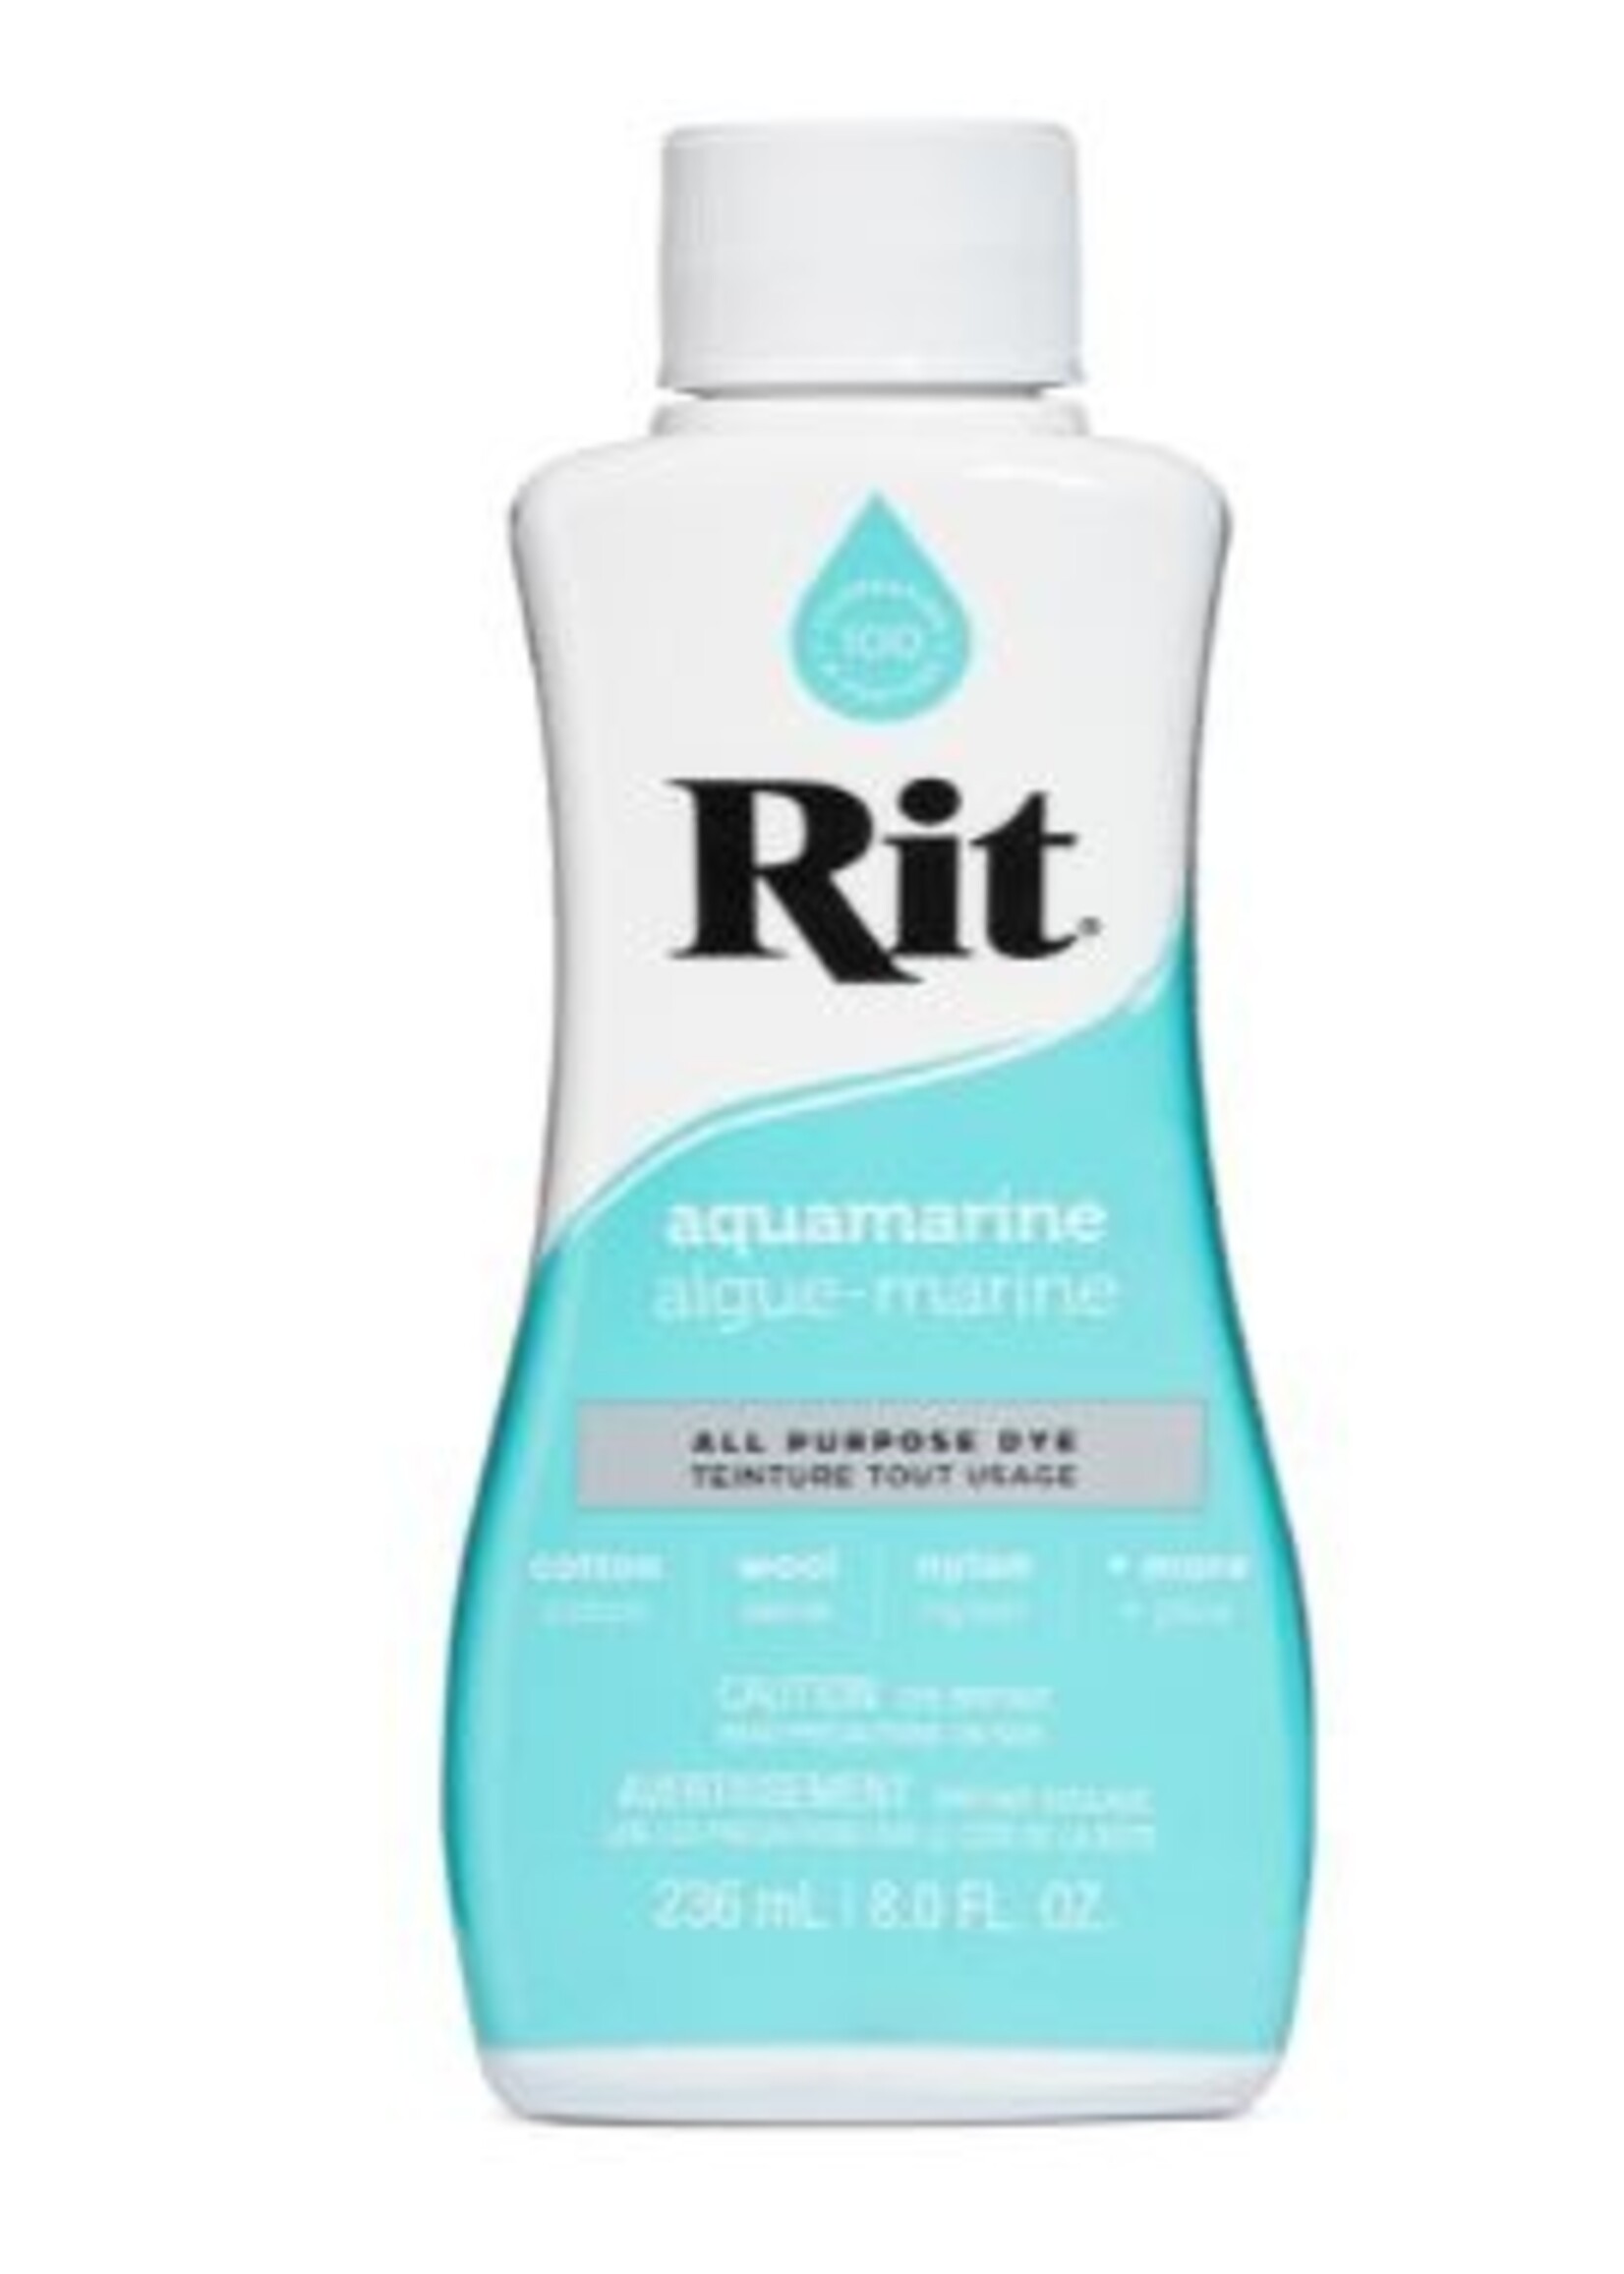 Dritz RIT All Purpose Liquid Dye - Aquamarine - 236 ml (8 oz)